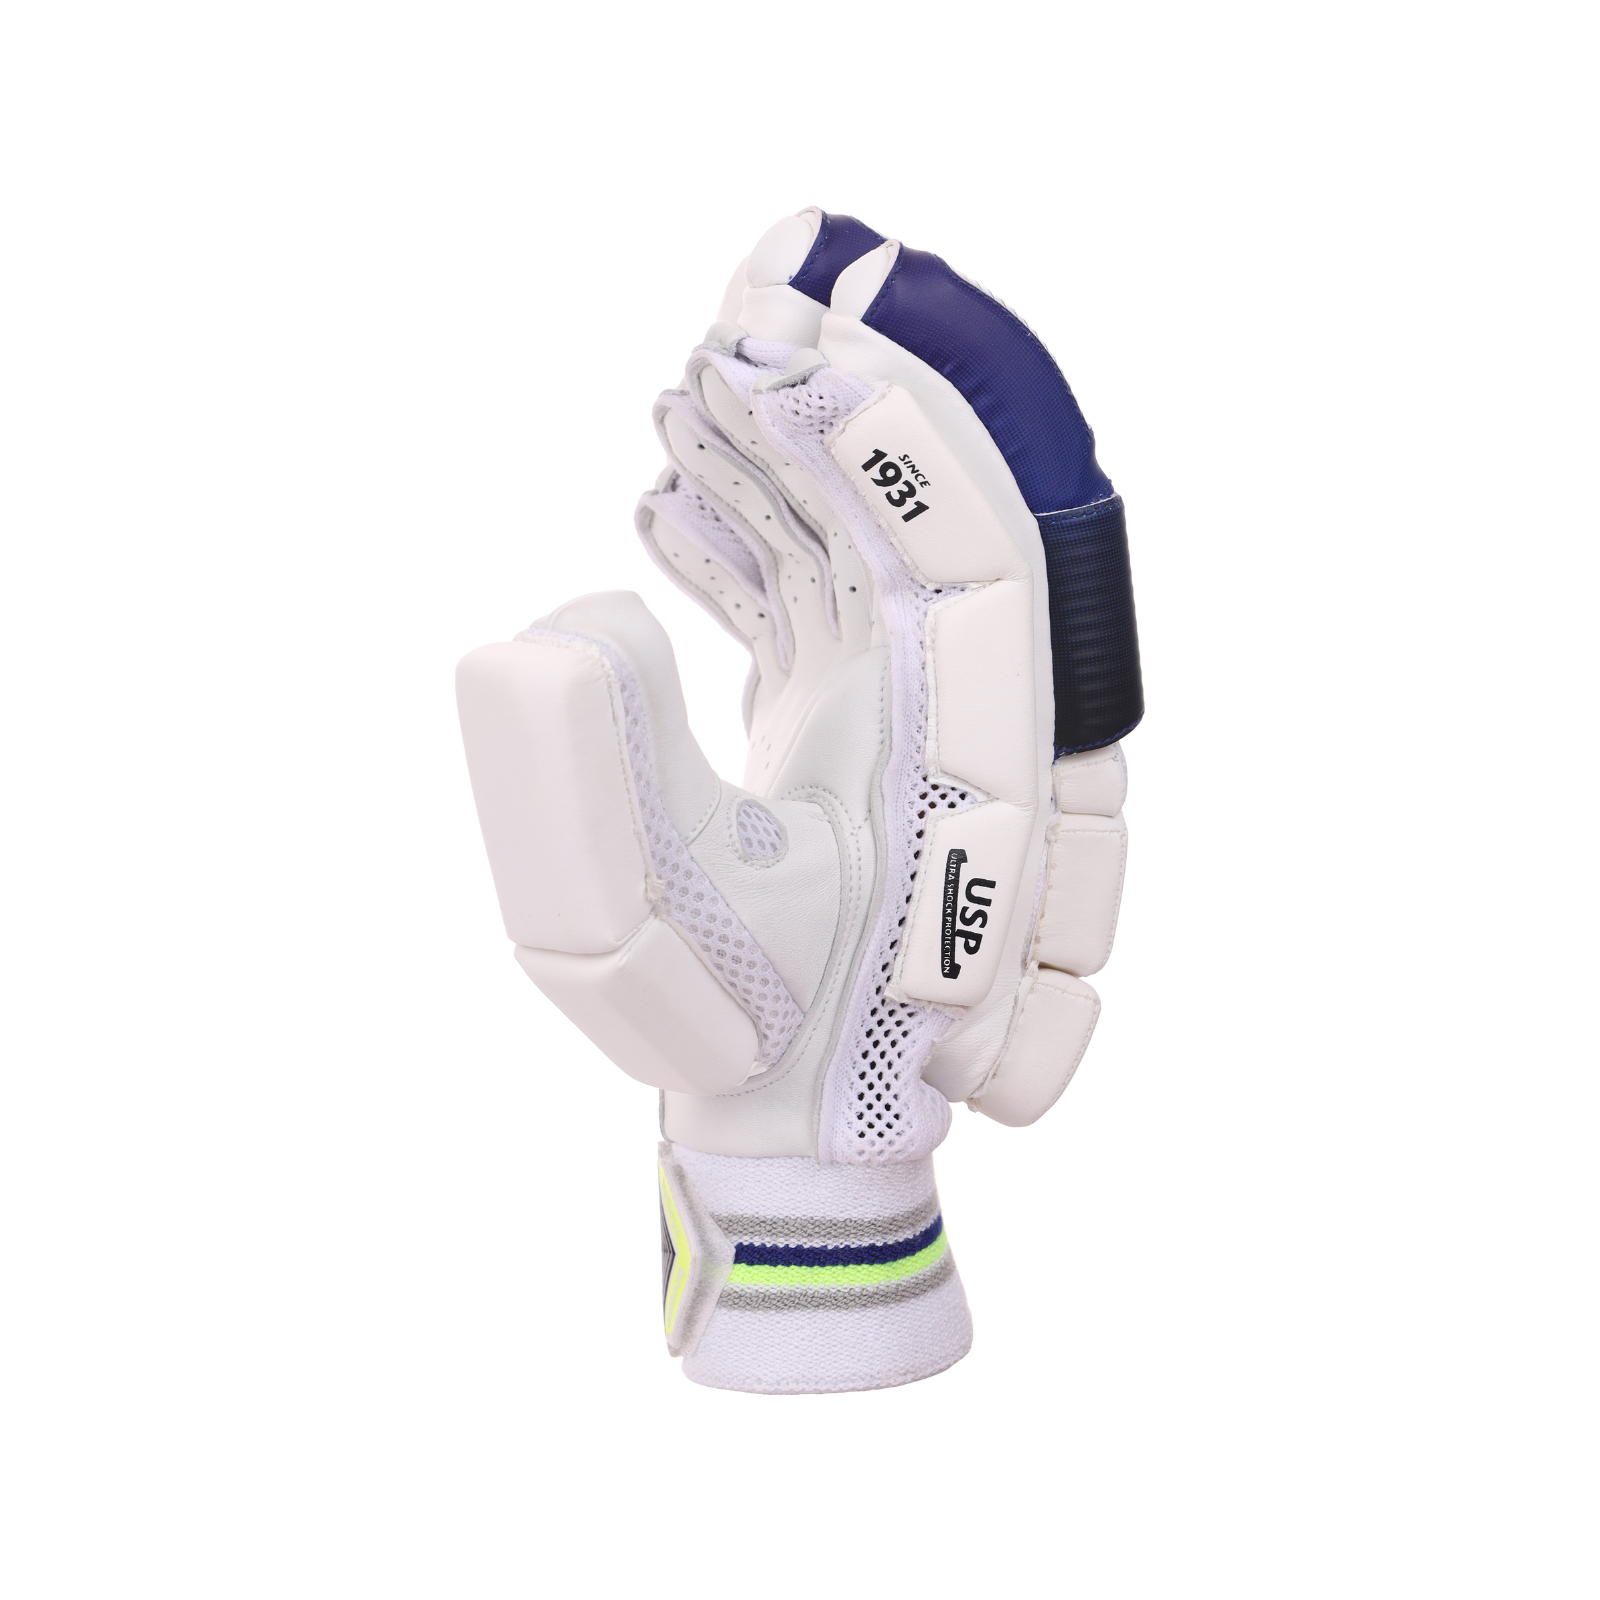 SG RSD Supalite®Batting Gloves